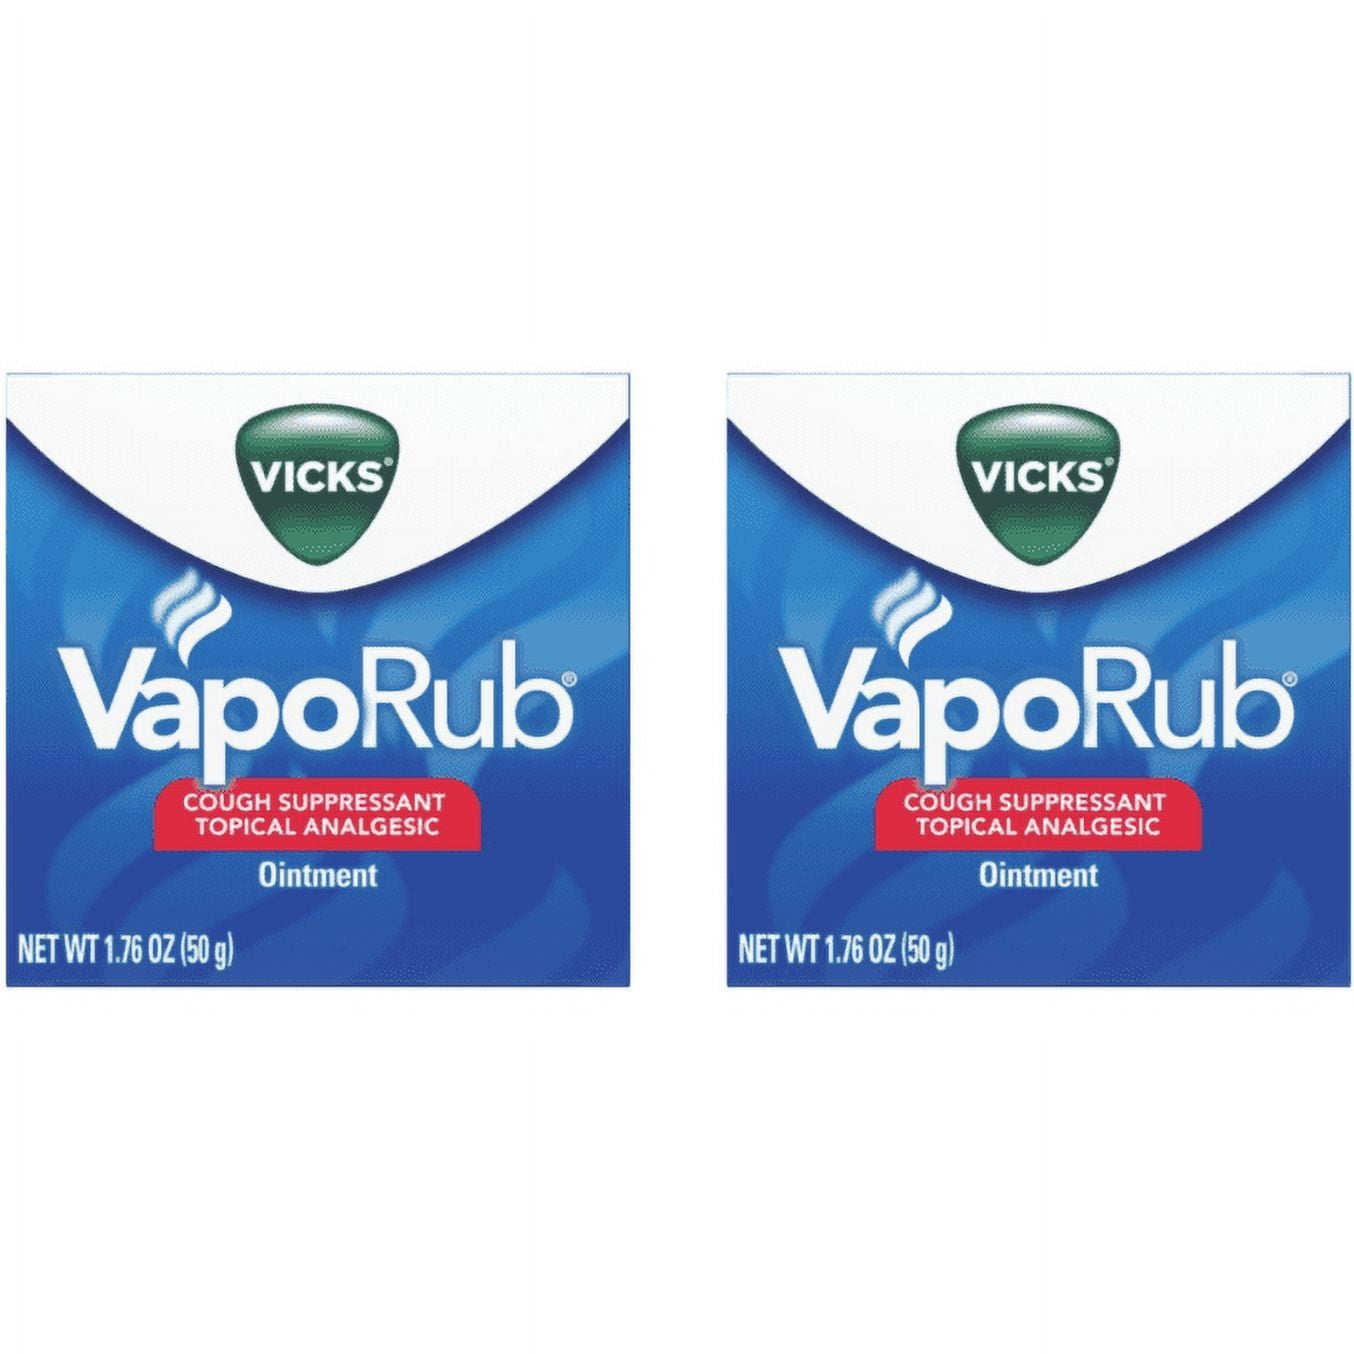 Vicks® VapoRub Cough Suppressant Topical Analgesic Ointment Original- 1.76oz